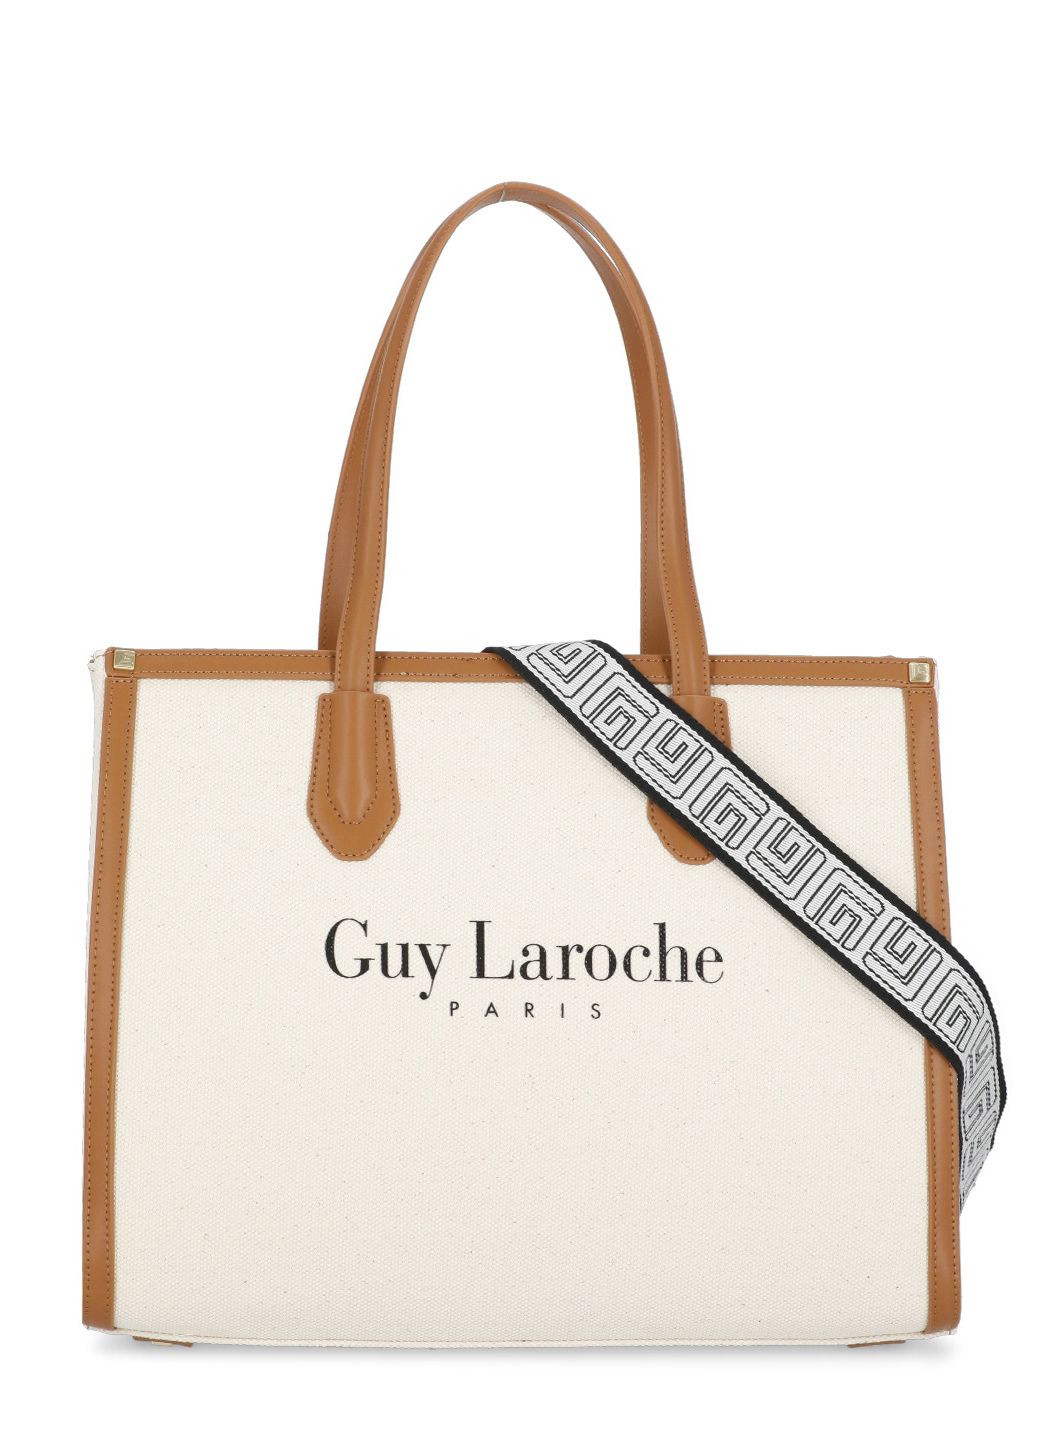 Guy Laroche, Bags, Guy Laroche Logo Italian Black Handbag